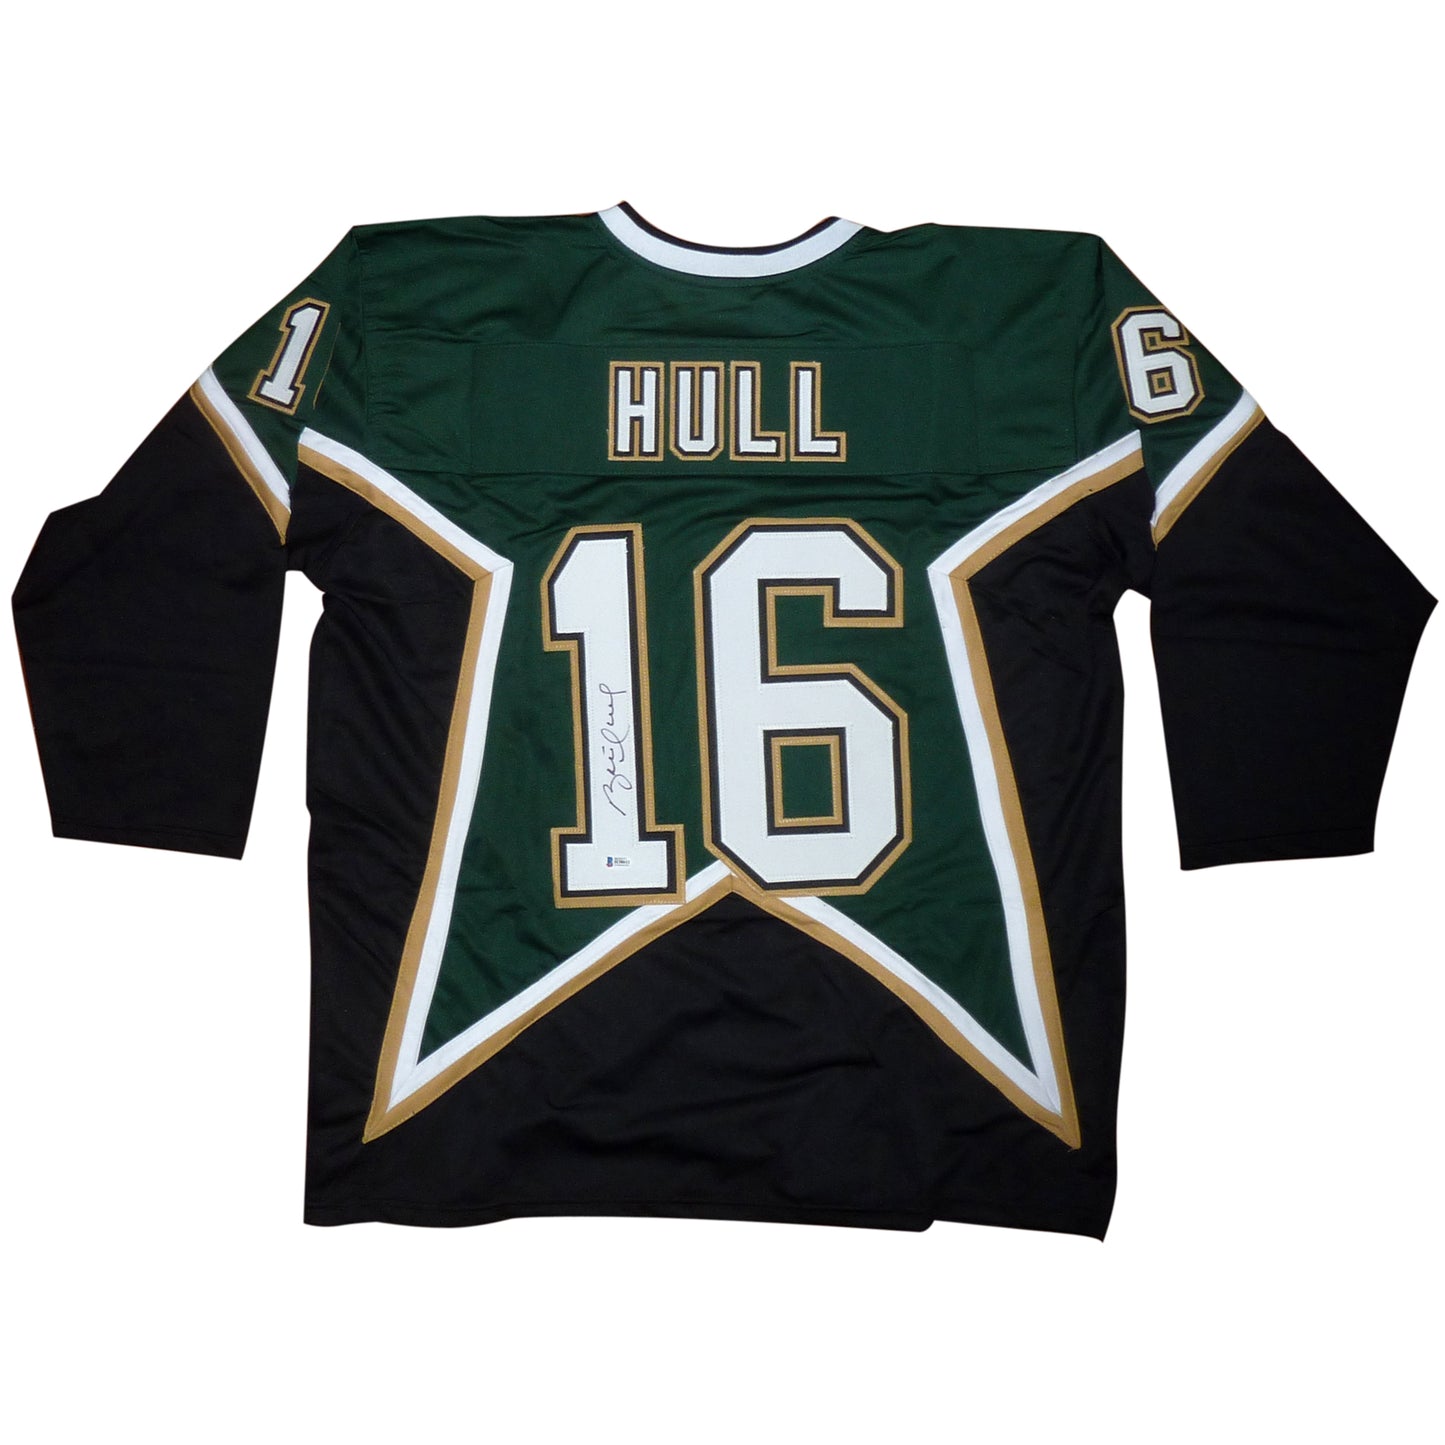 Brett Hull Autographed Dallas (Green #16) Jersey - BAS